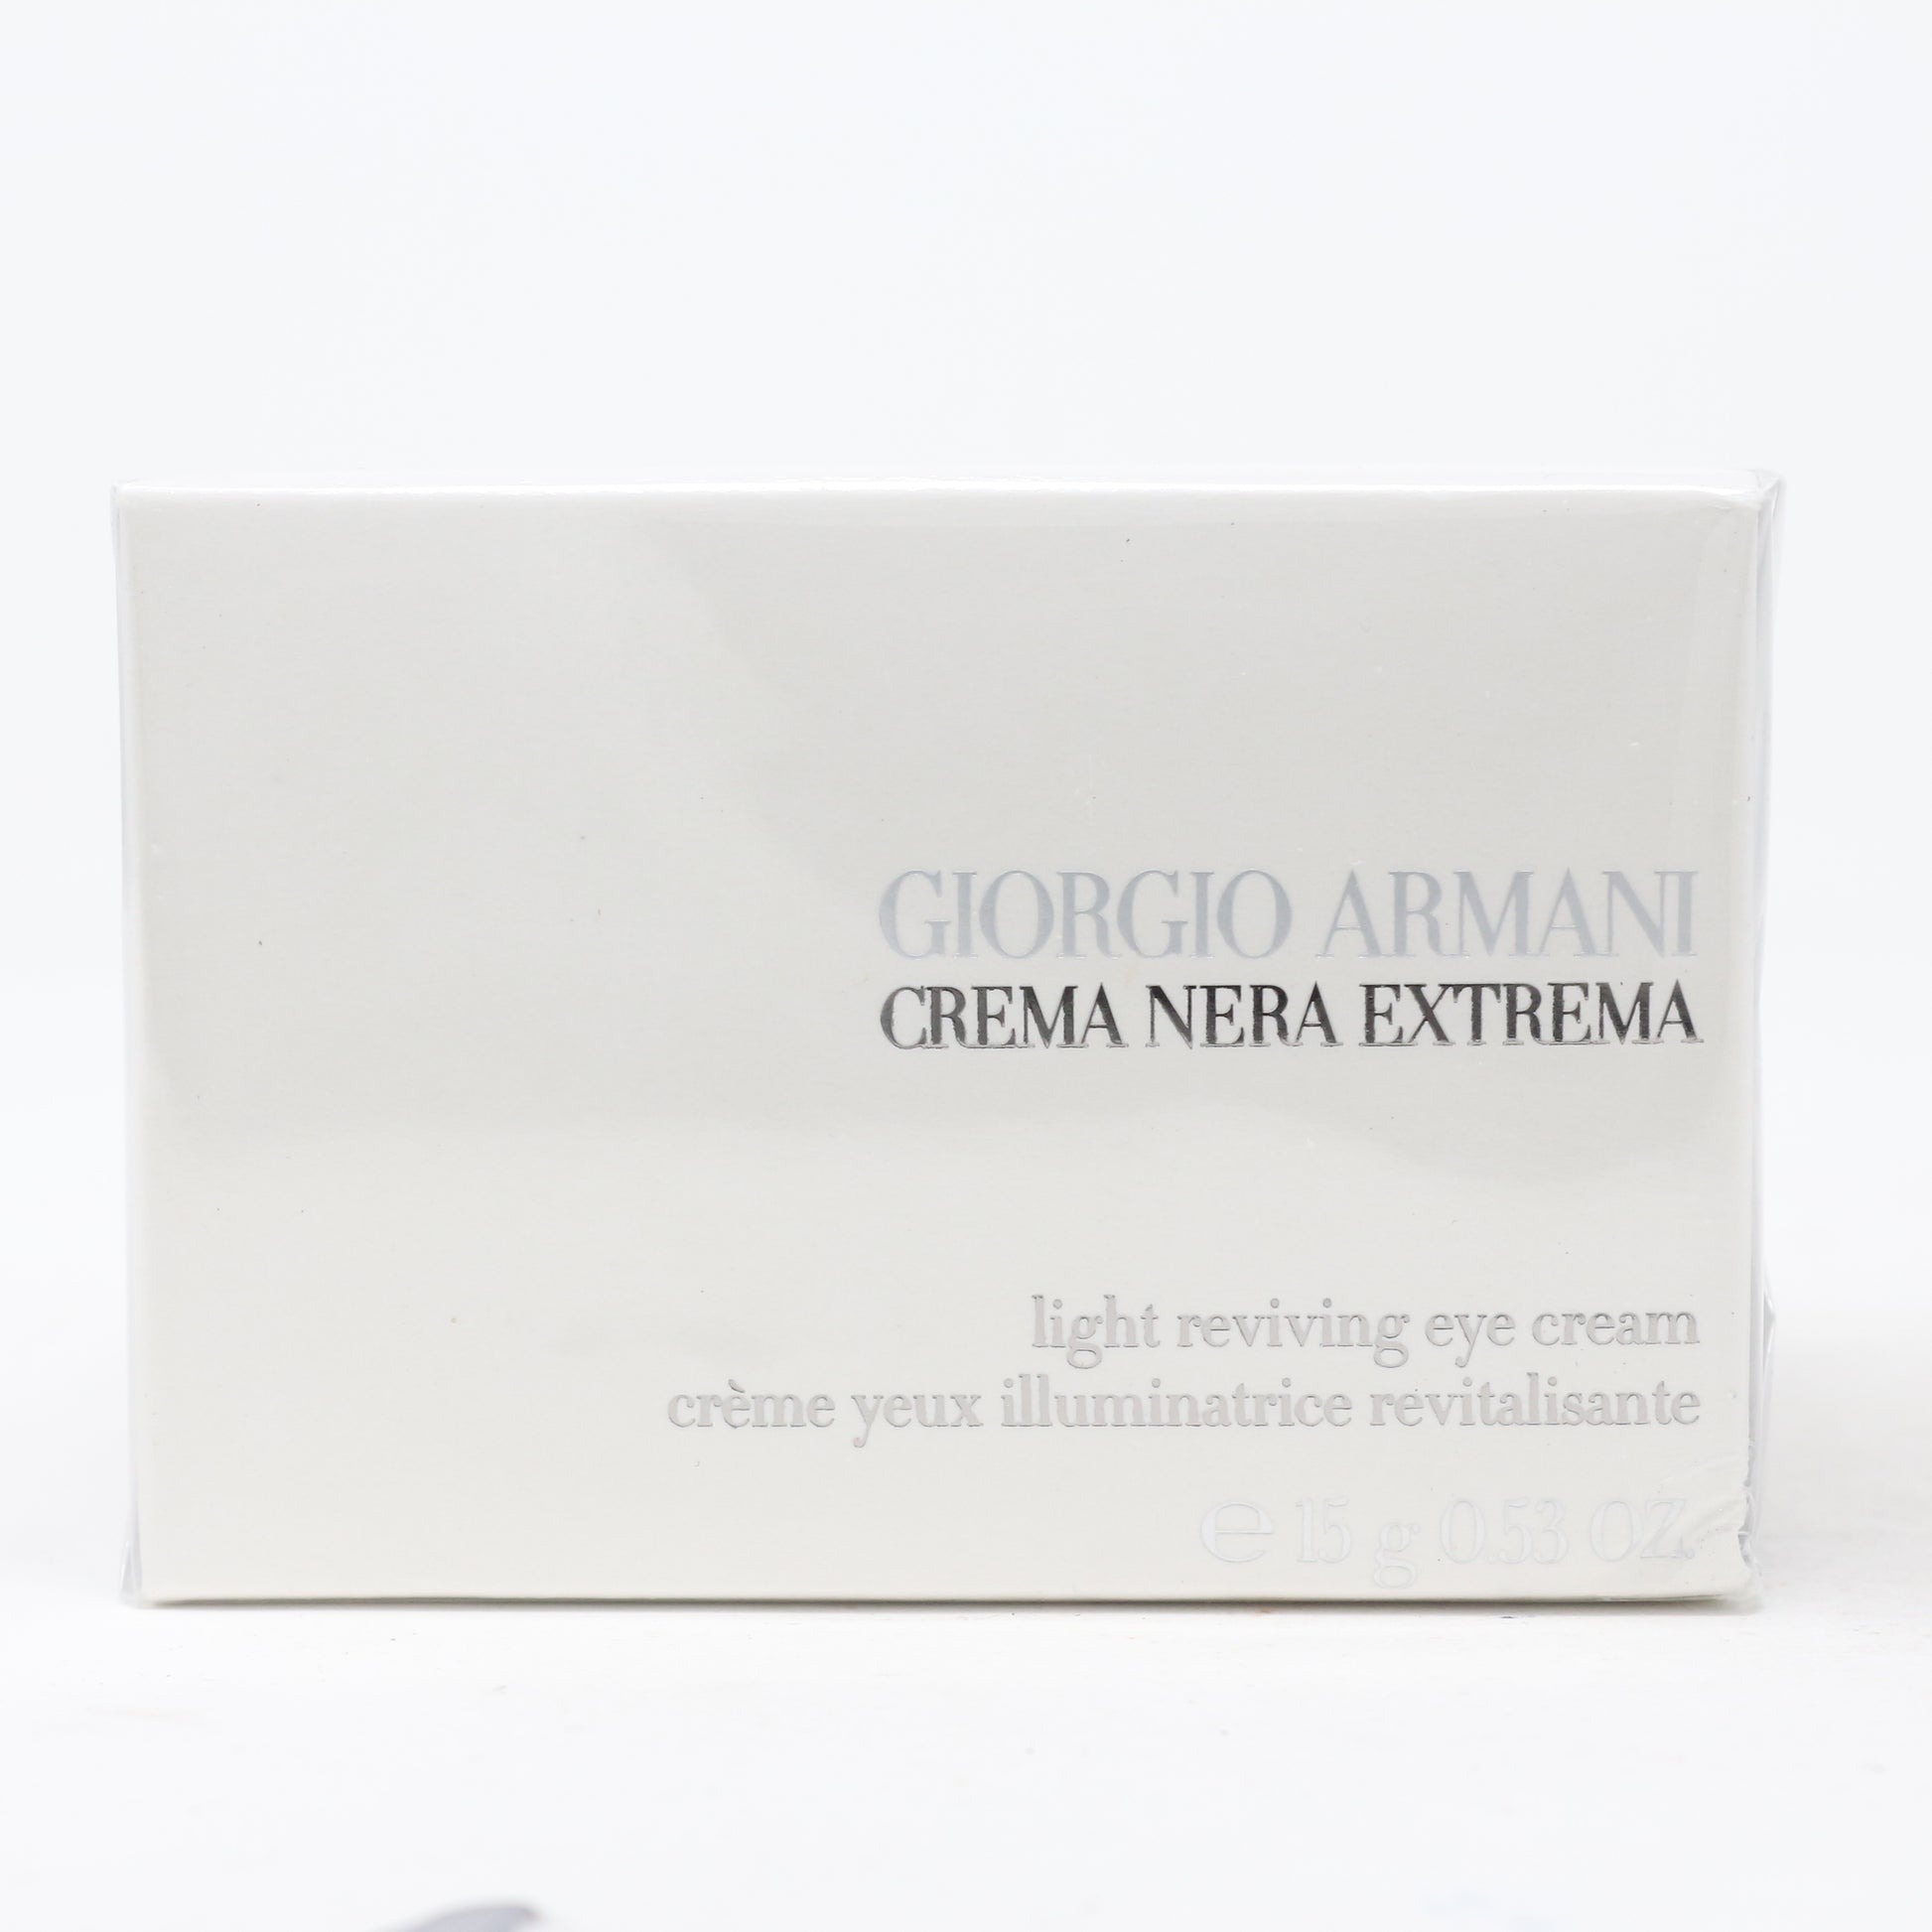 Crema Nera Extrema Light Reviving Eye Cream 15 g